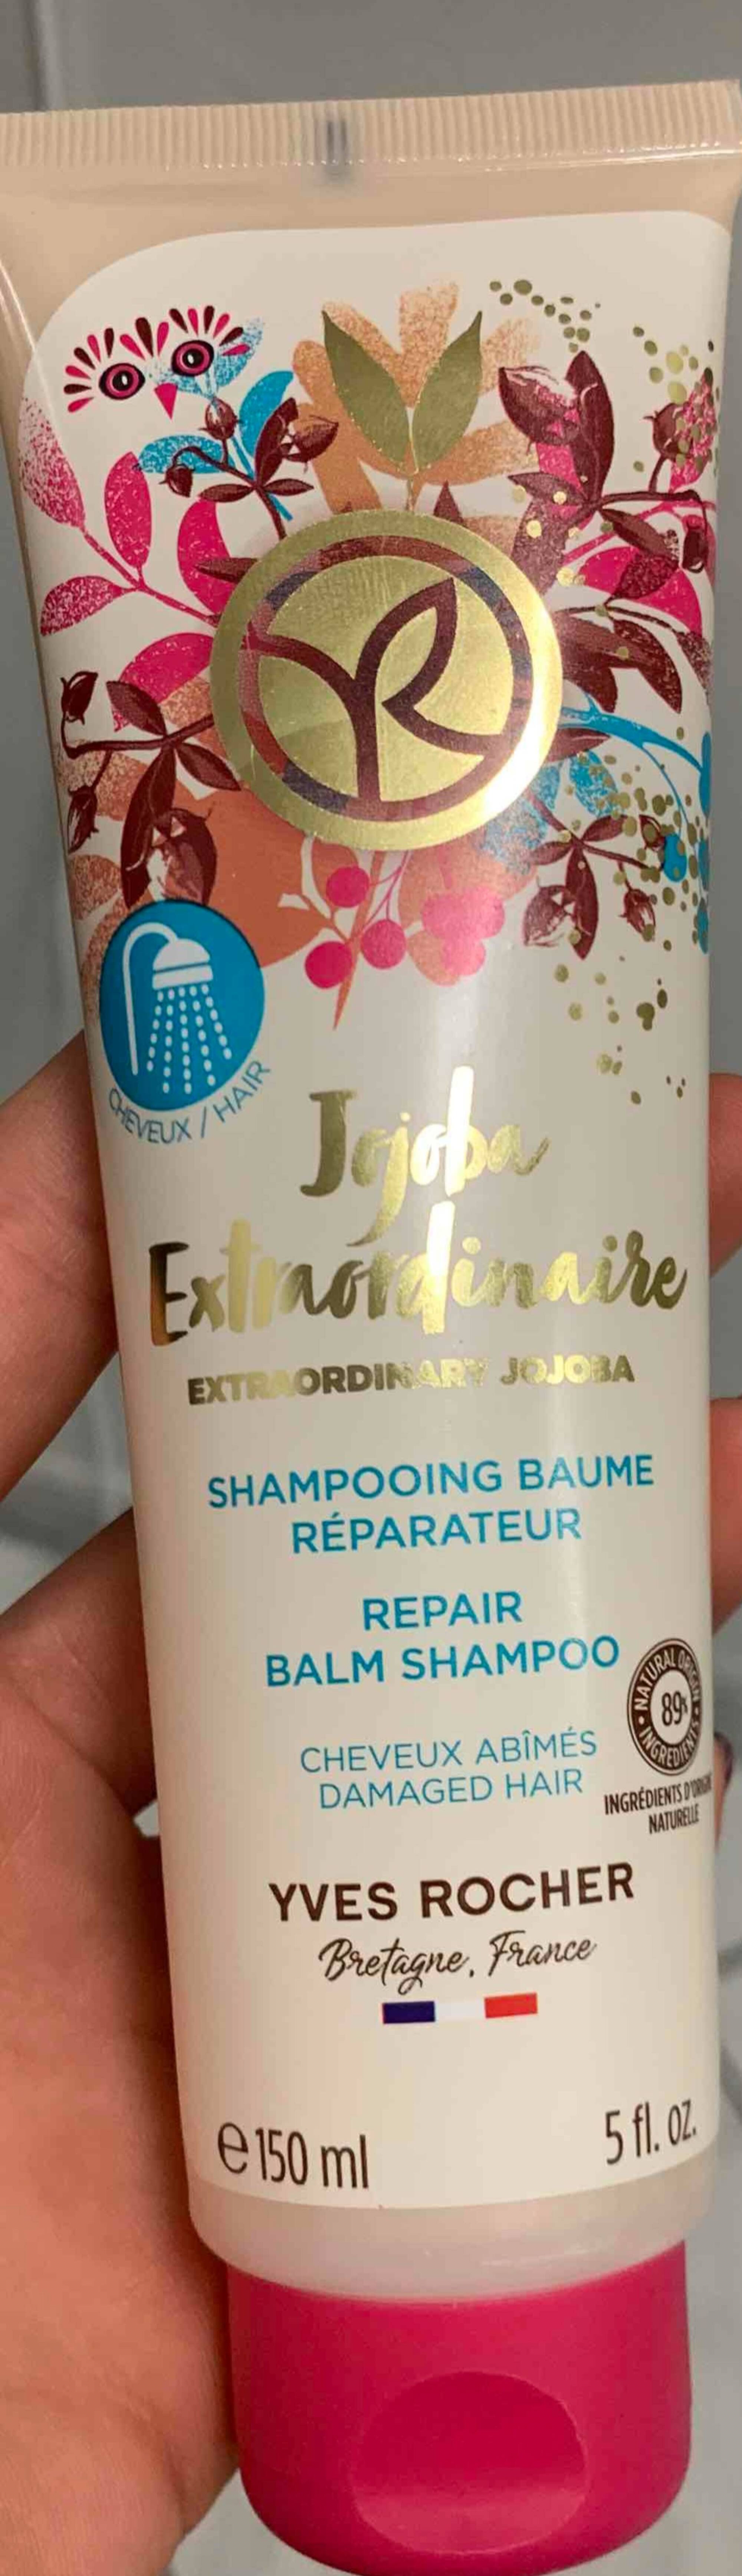 YVES ROCHER - Jojoba extraordinaire - Shampoing baume reparateur 